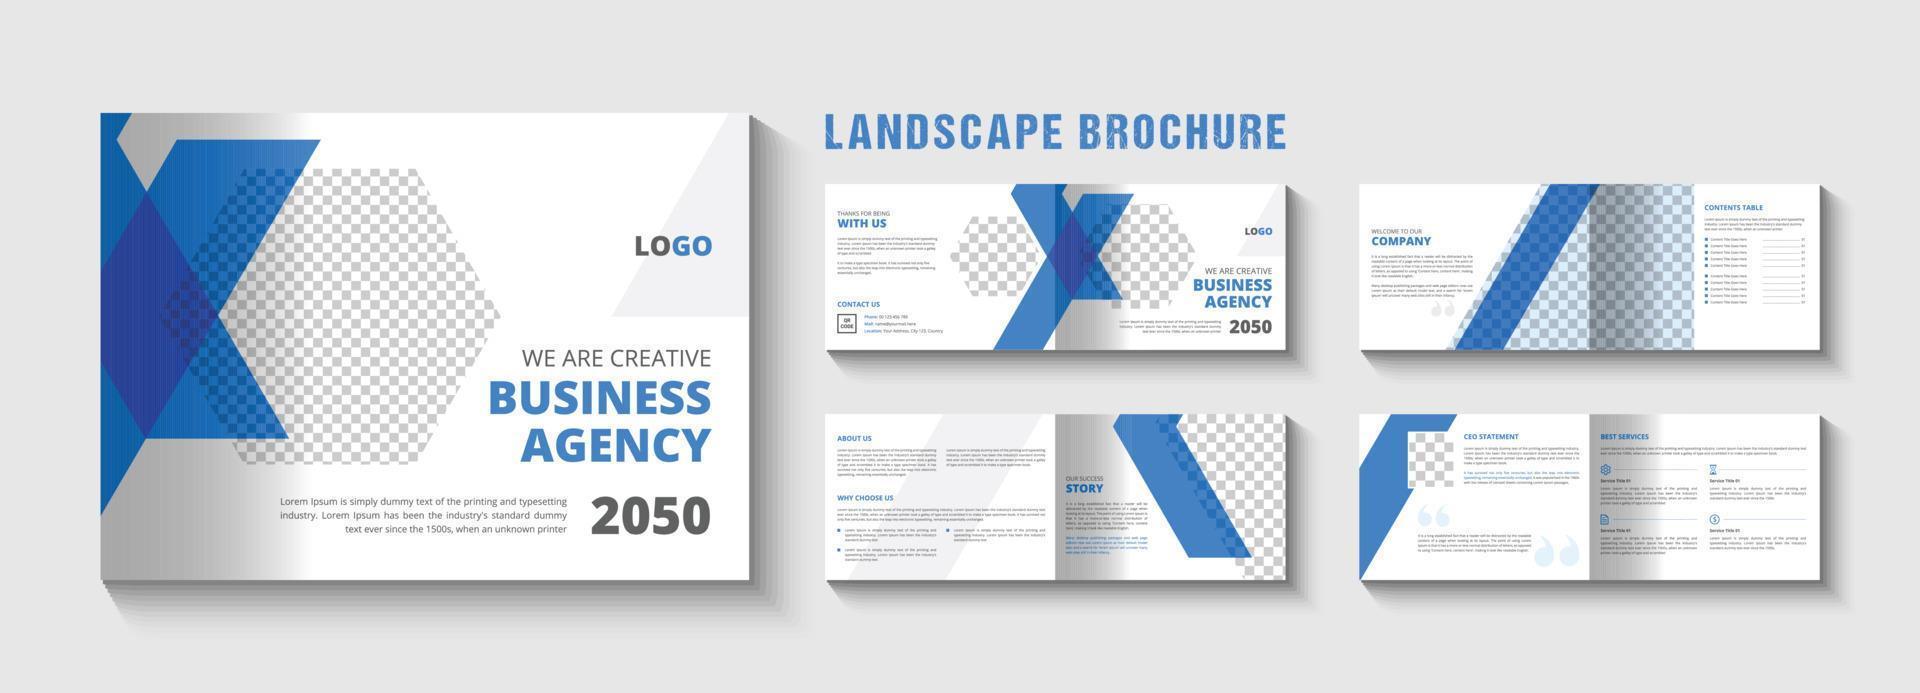 Corporate Business Landscape Brochure vector